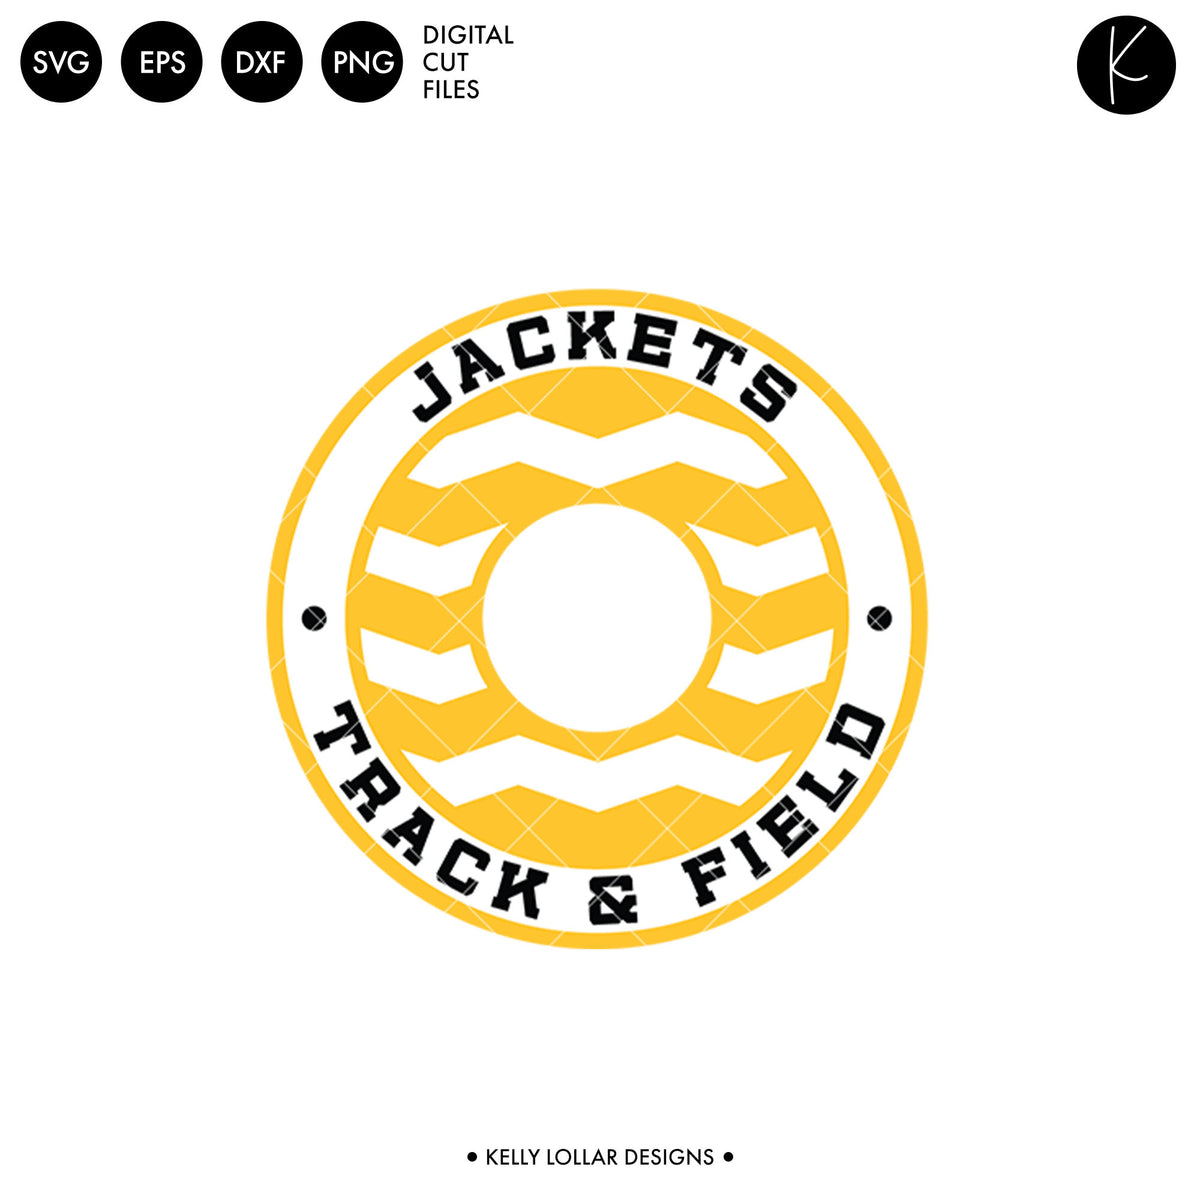 Jackets Track &amp; Field Bundle | SVG DXF EPS PNG Cut Files